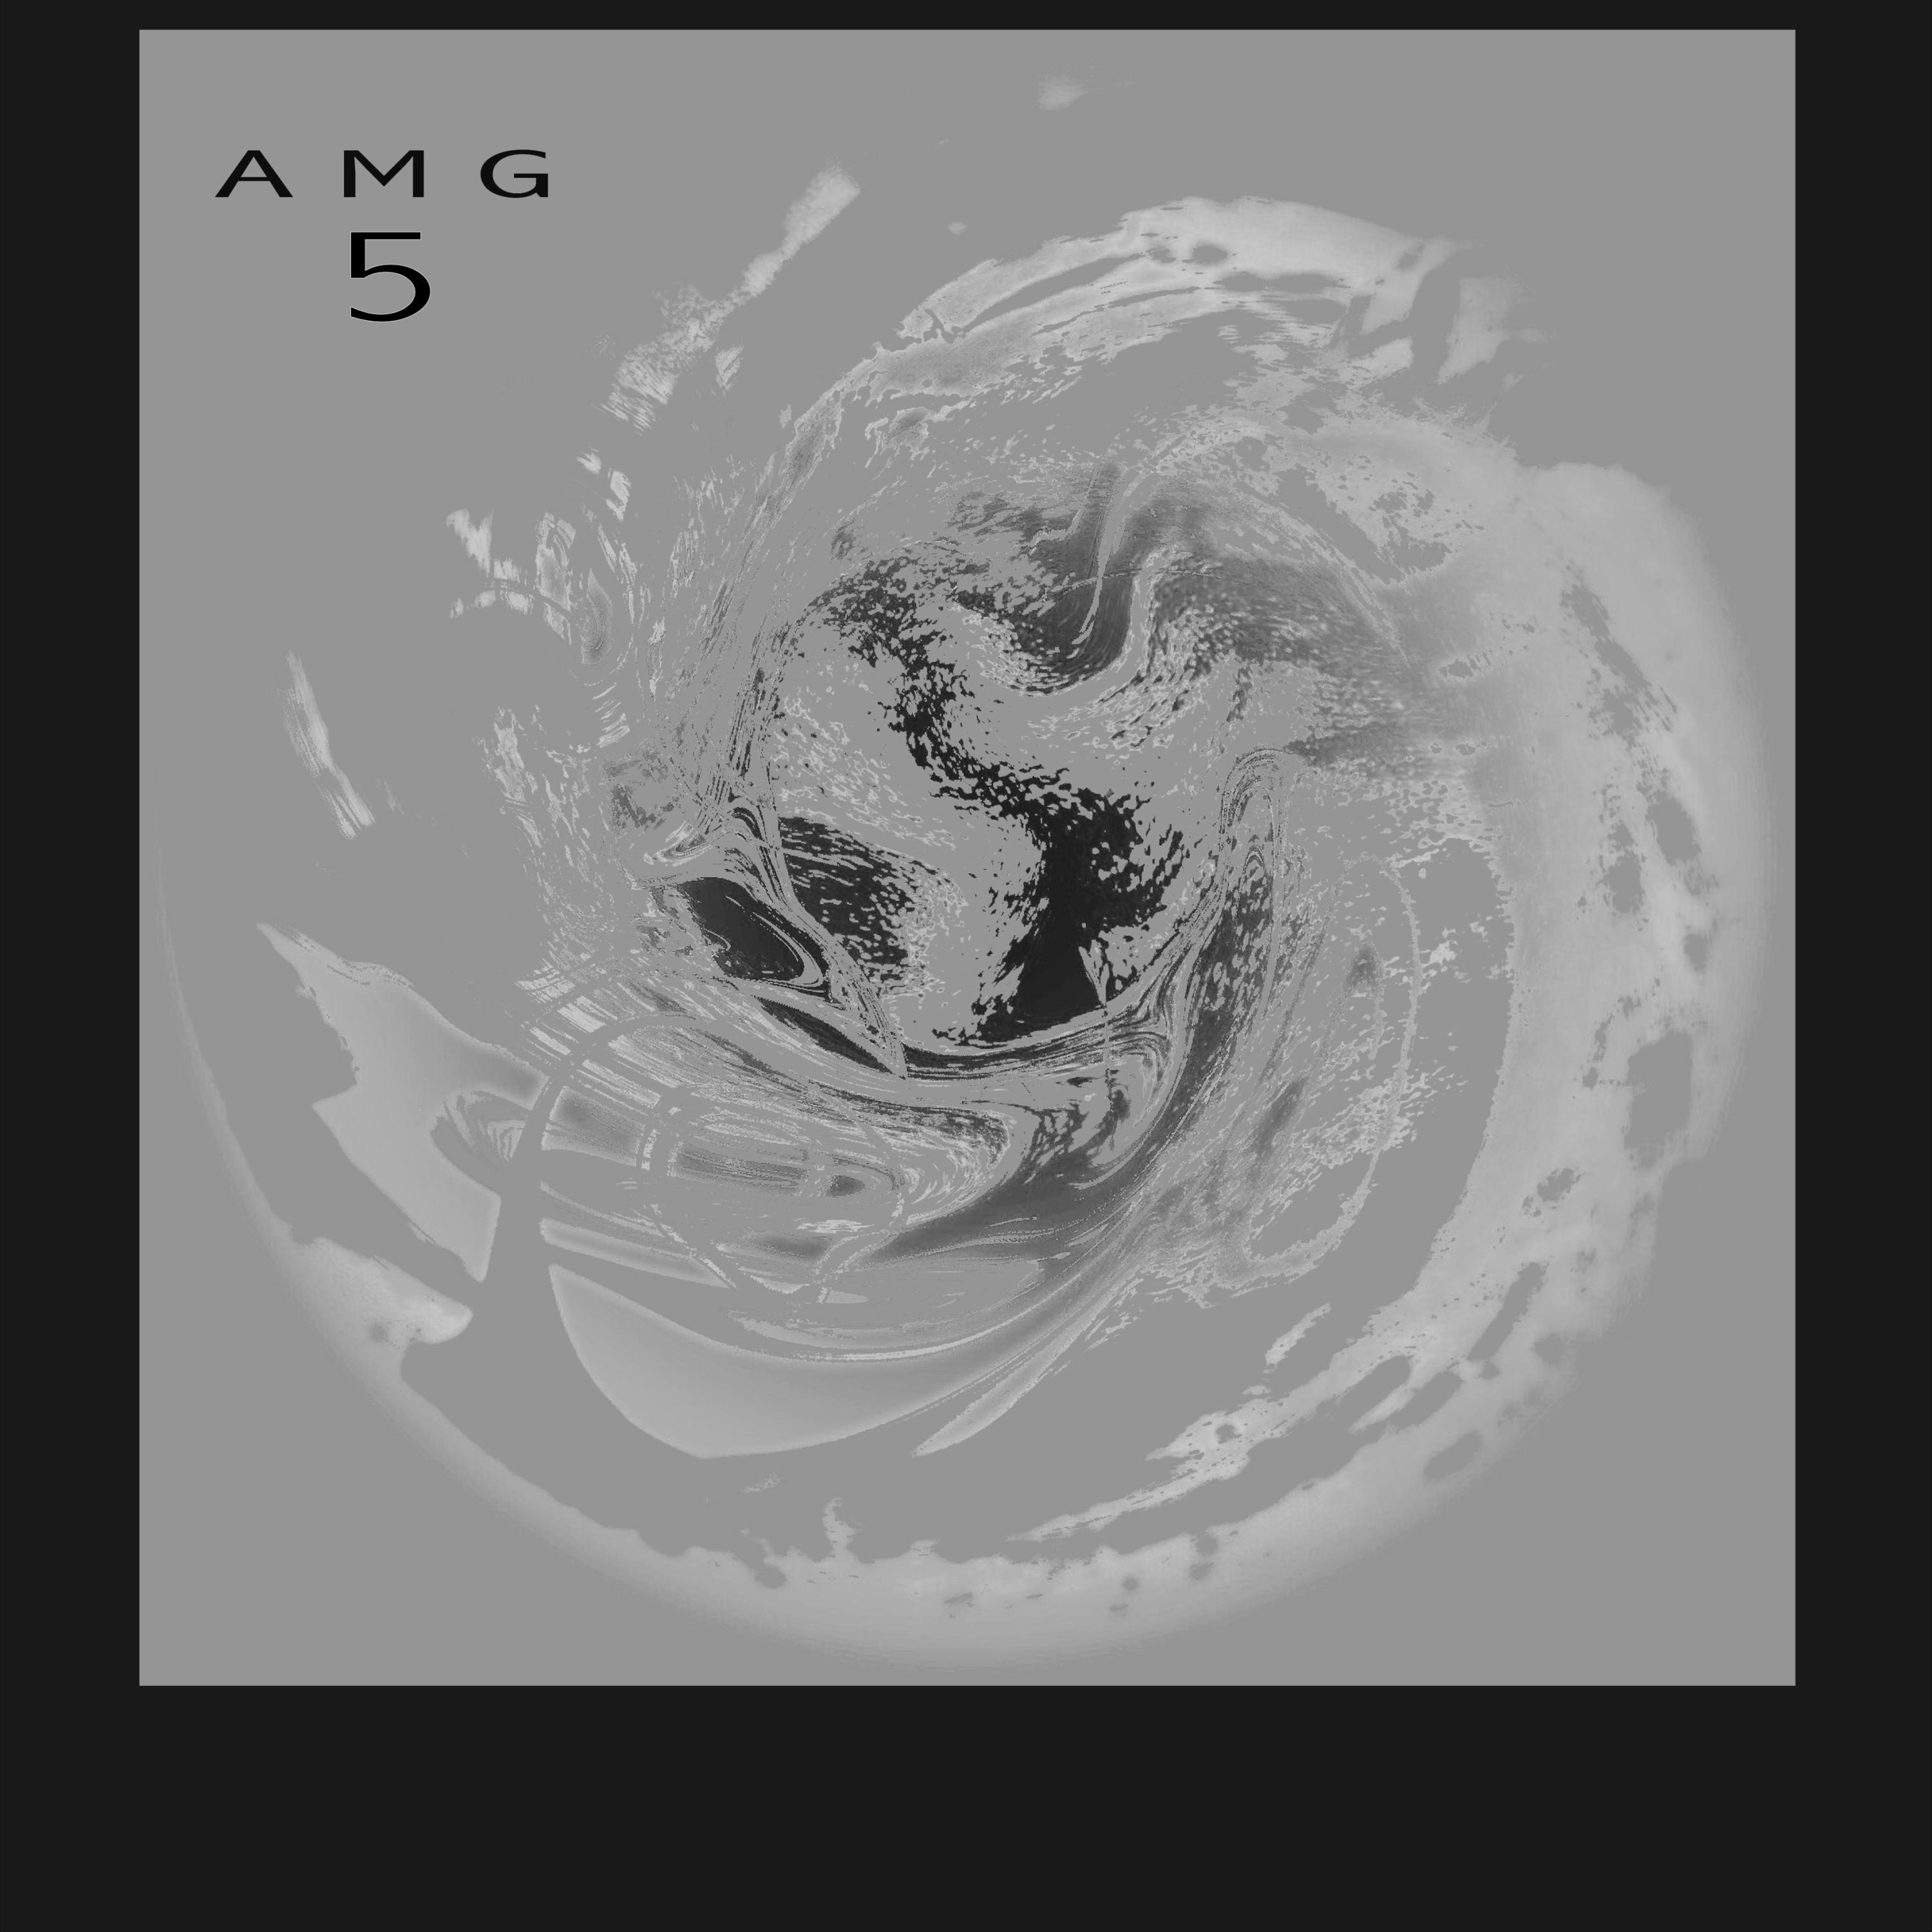 A M G - Amg 5 (Heizkeller Version)